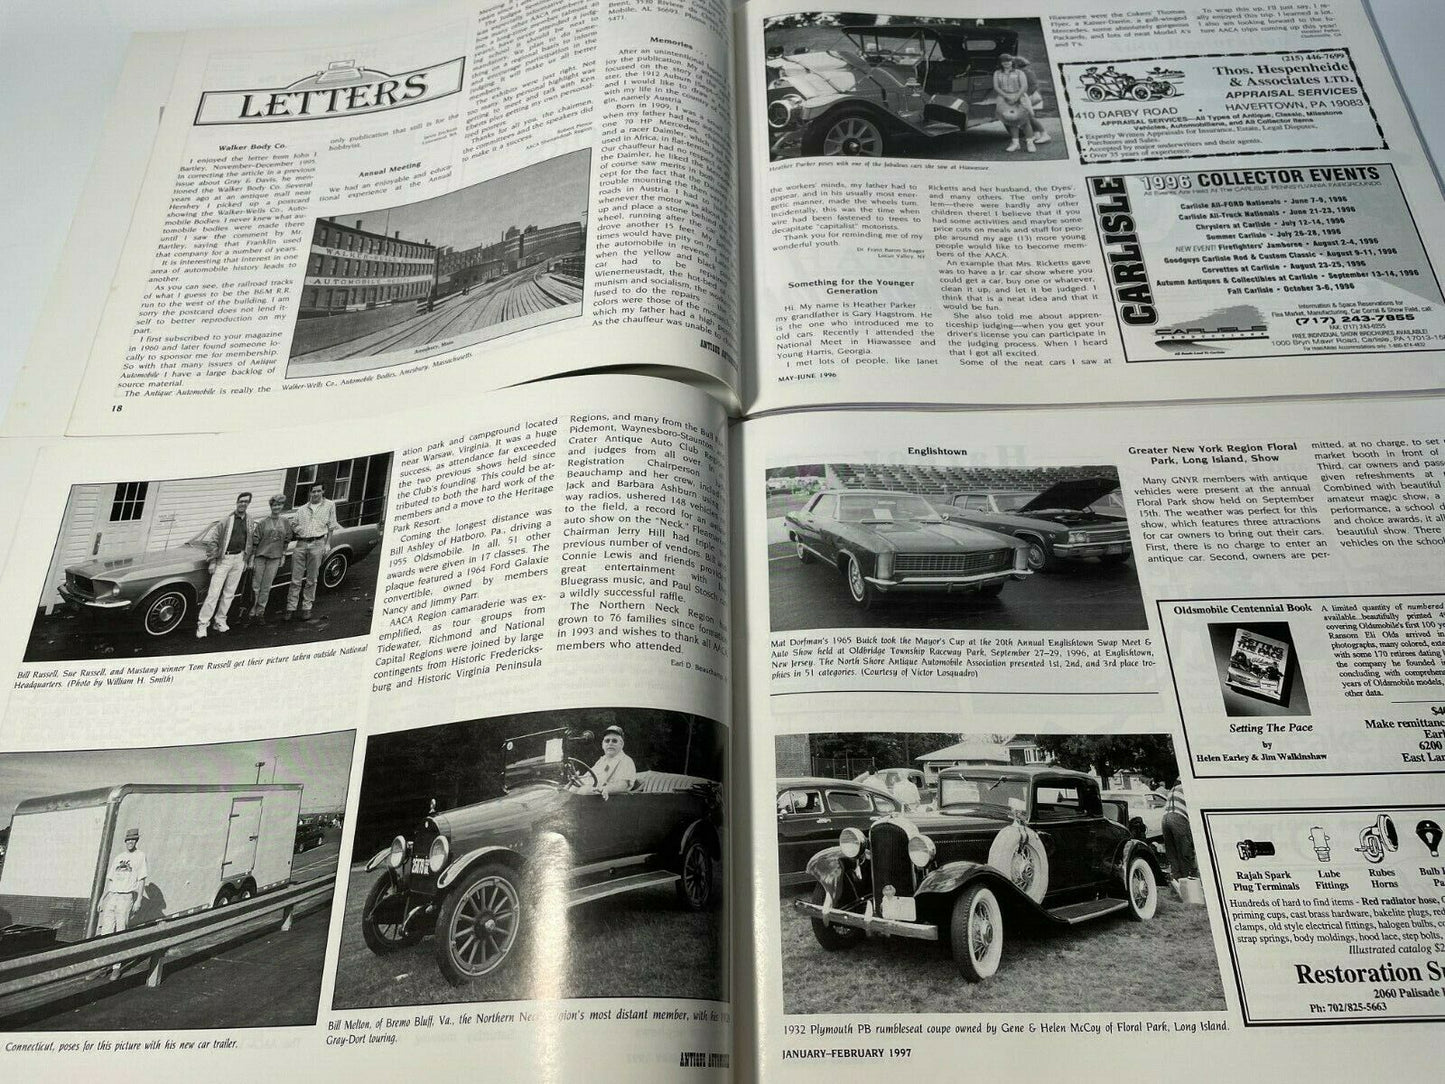 ANTIQUE AUTOMOBILE, May/June 1996, Vol. 60, No. 3 Jan/Feb 1997 Vol 61, No.1